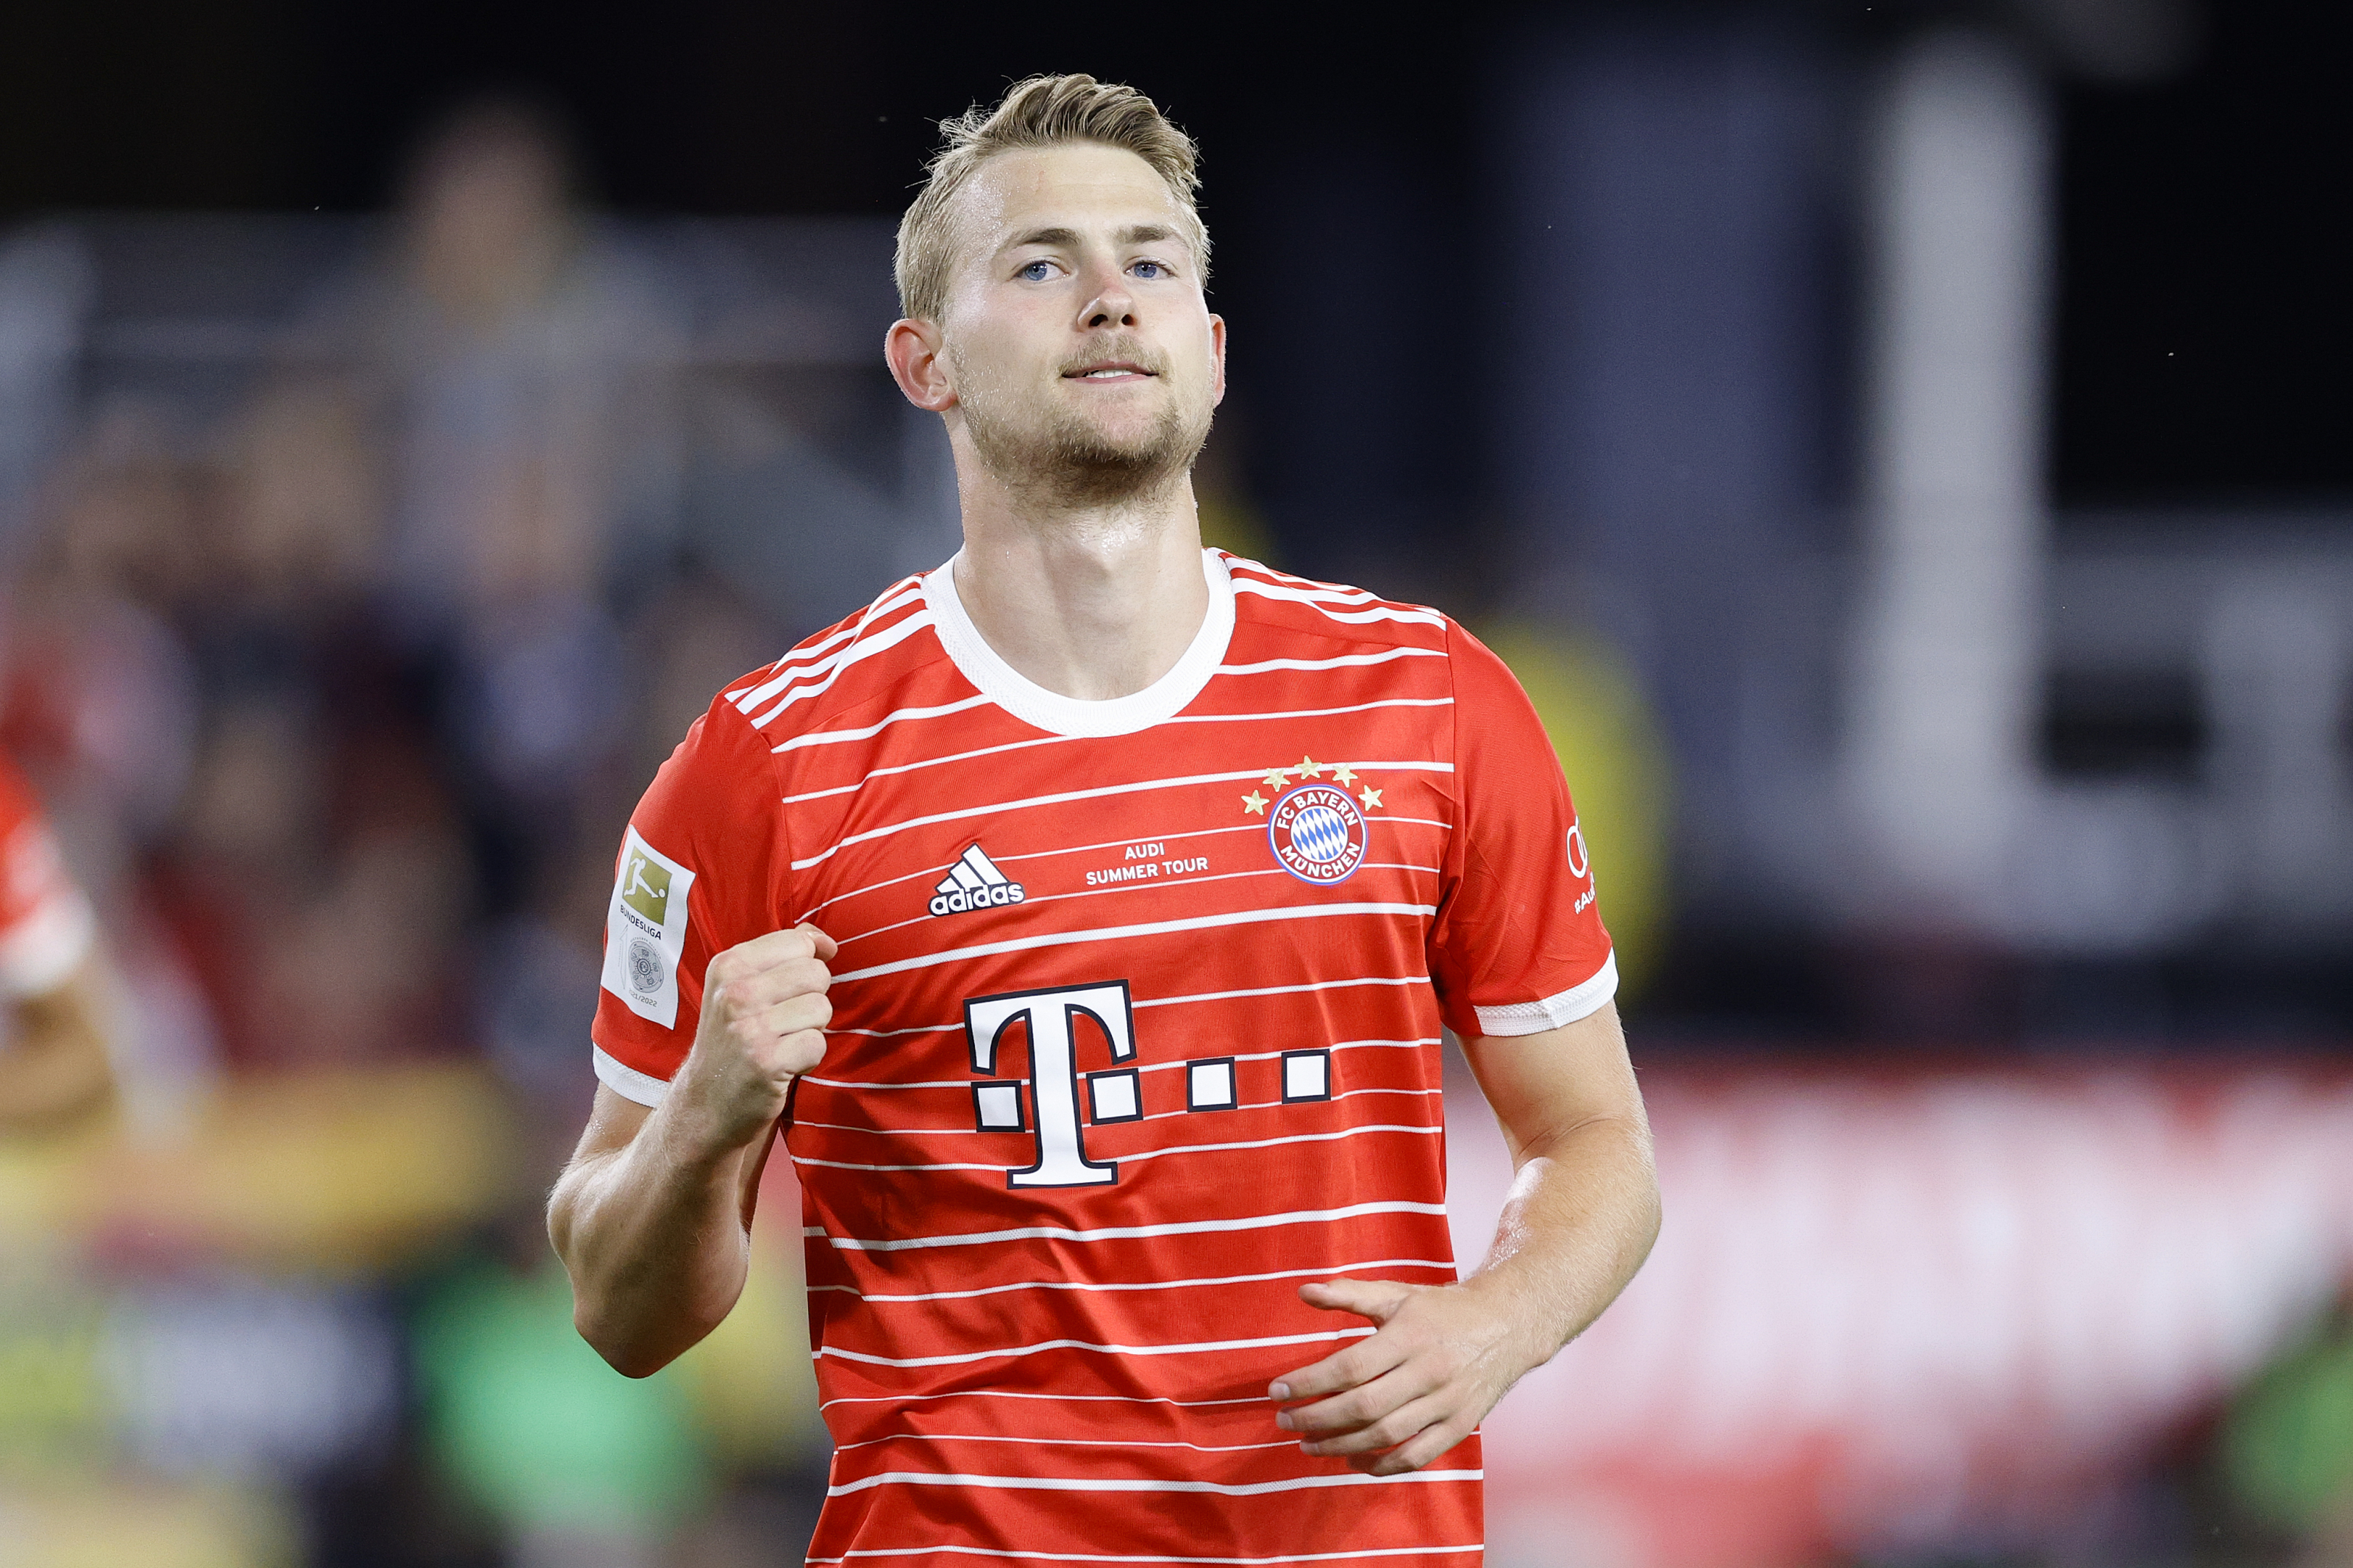 Bayern Munich: Matthijs de Ligt reveals reasons behind move to Bavaria